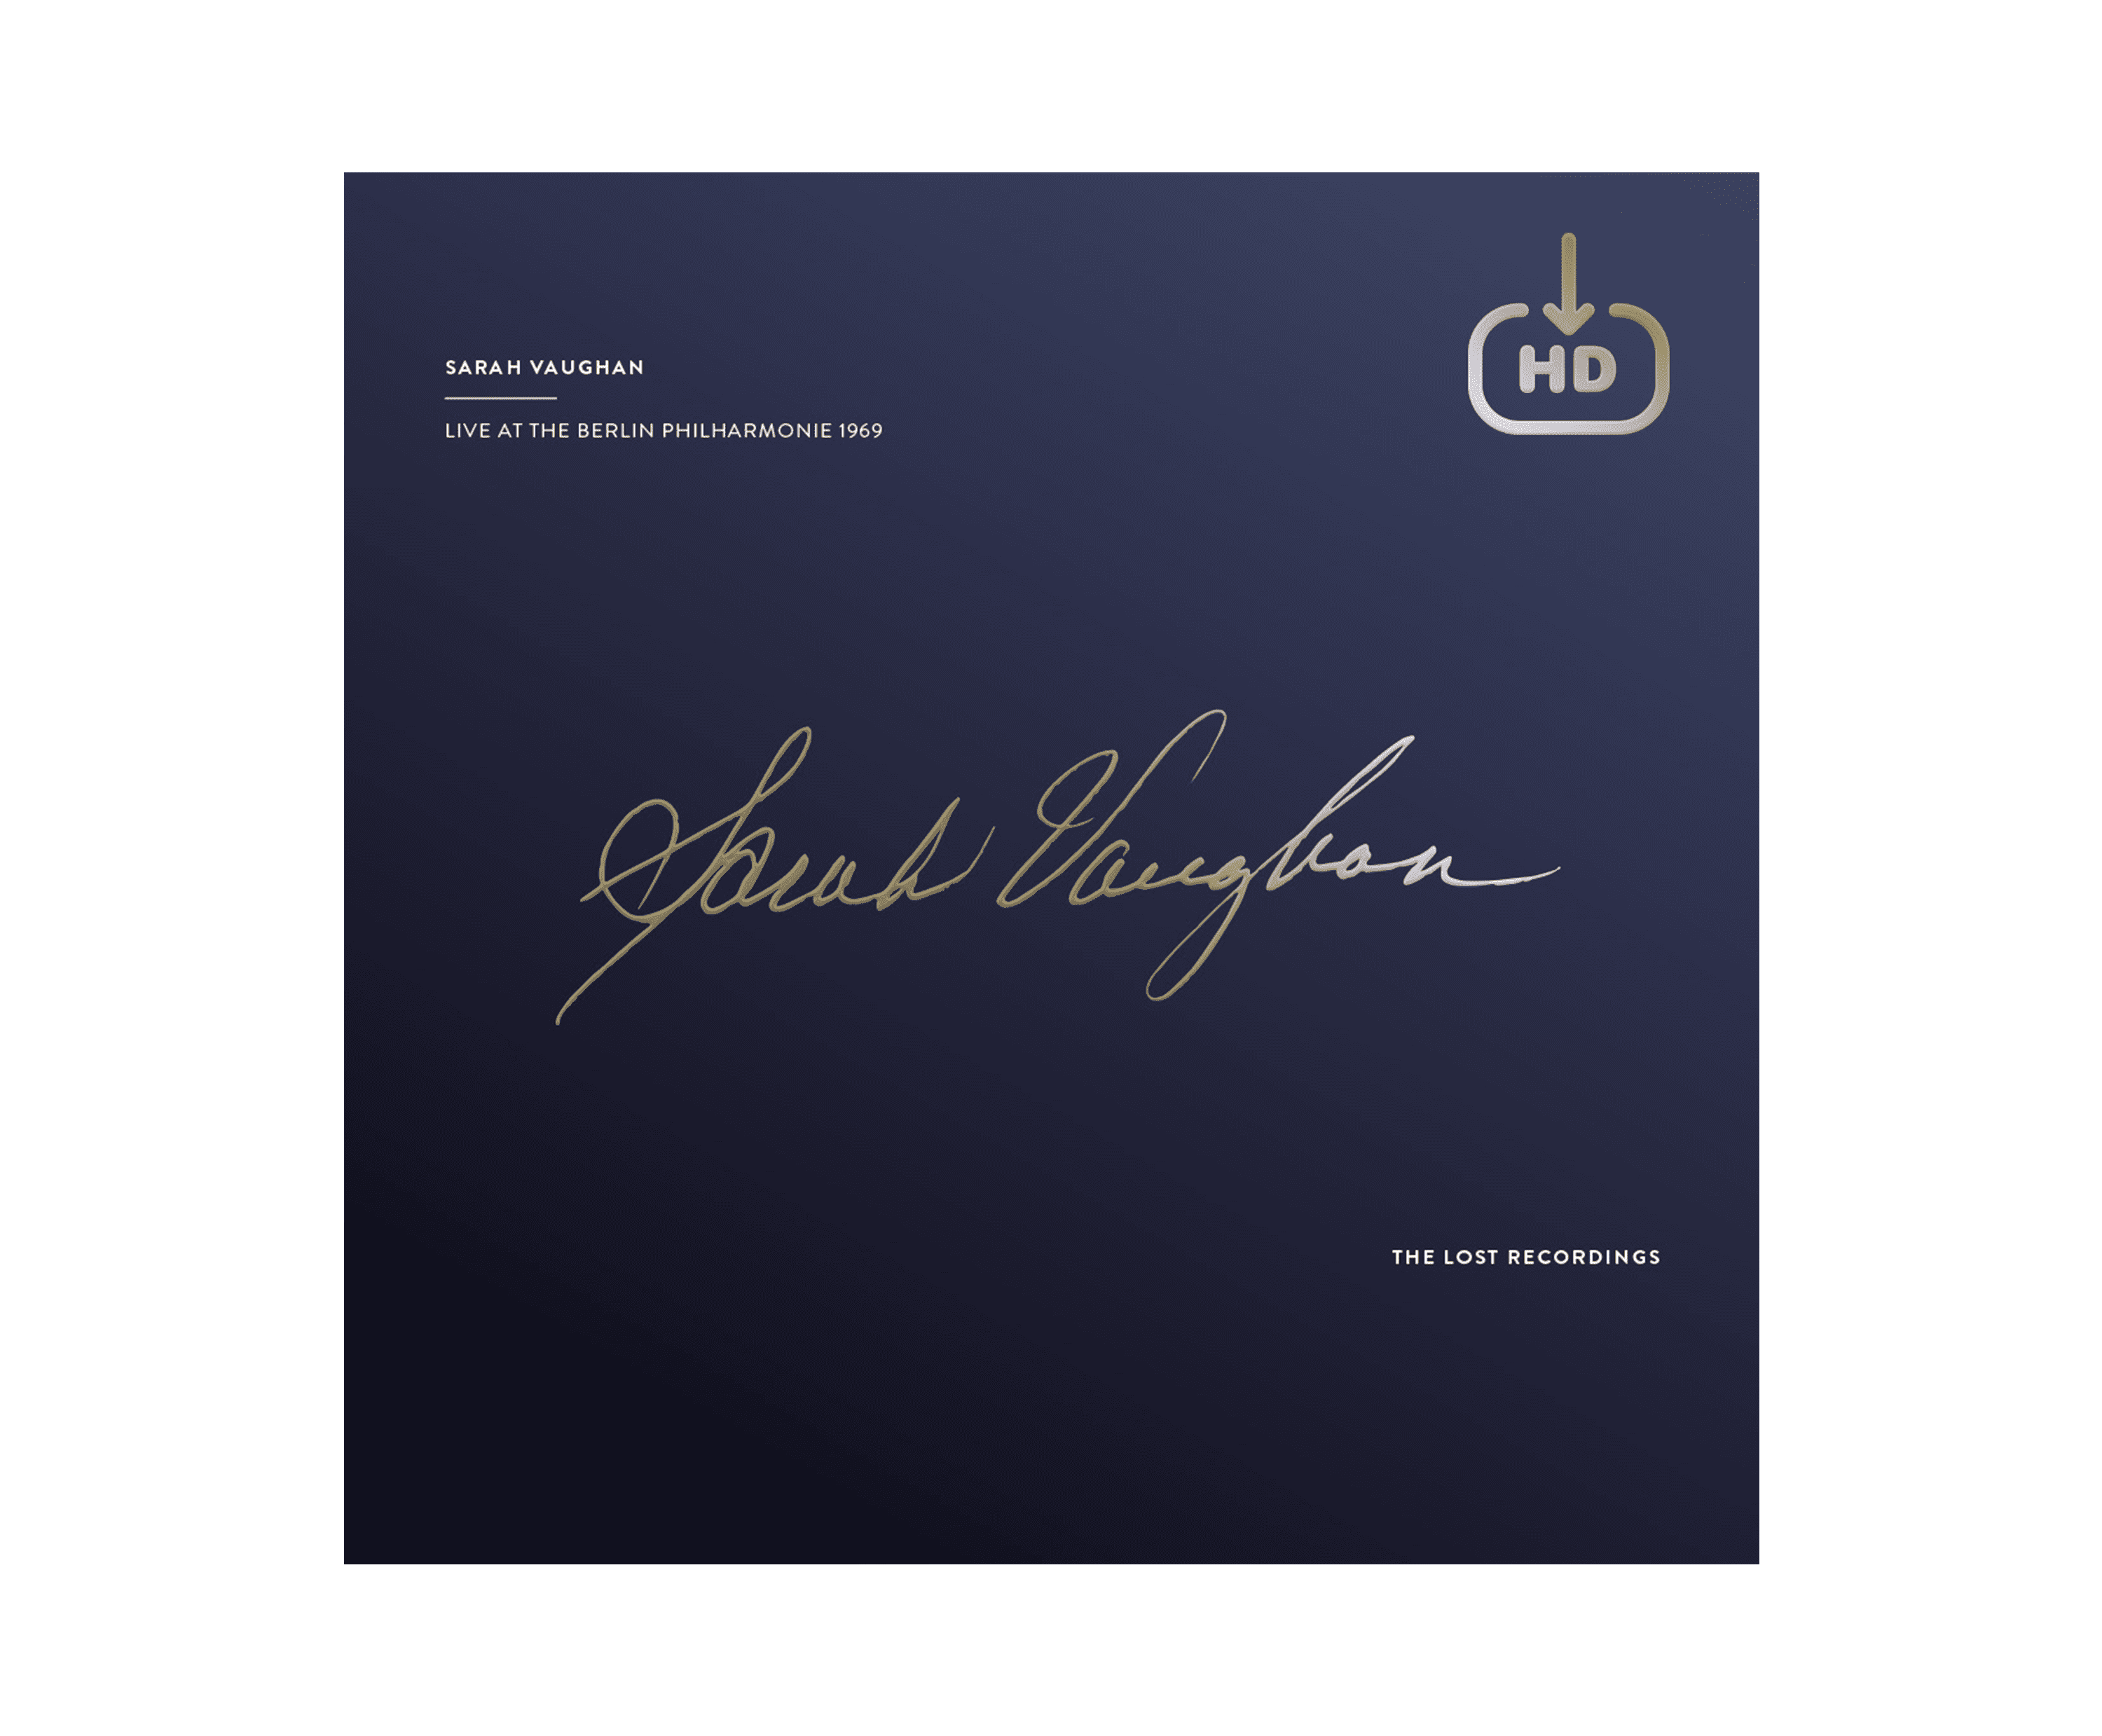 Sarah Vaughan Live at the Berlin Philharmonie 1969